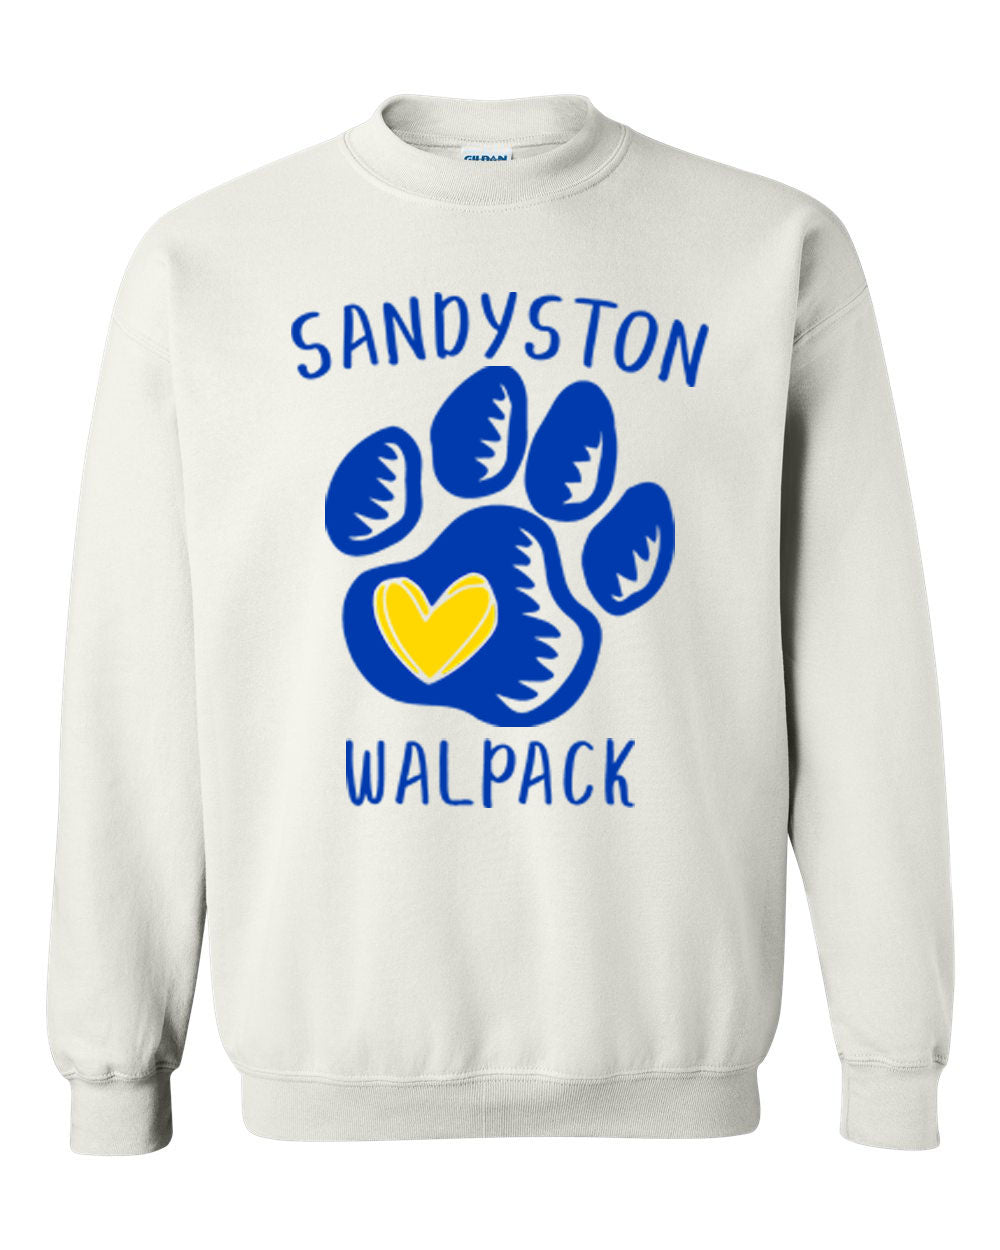 Sandyston Walpack Design 1 non hooded sweatshirt